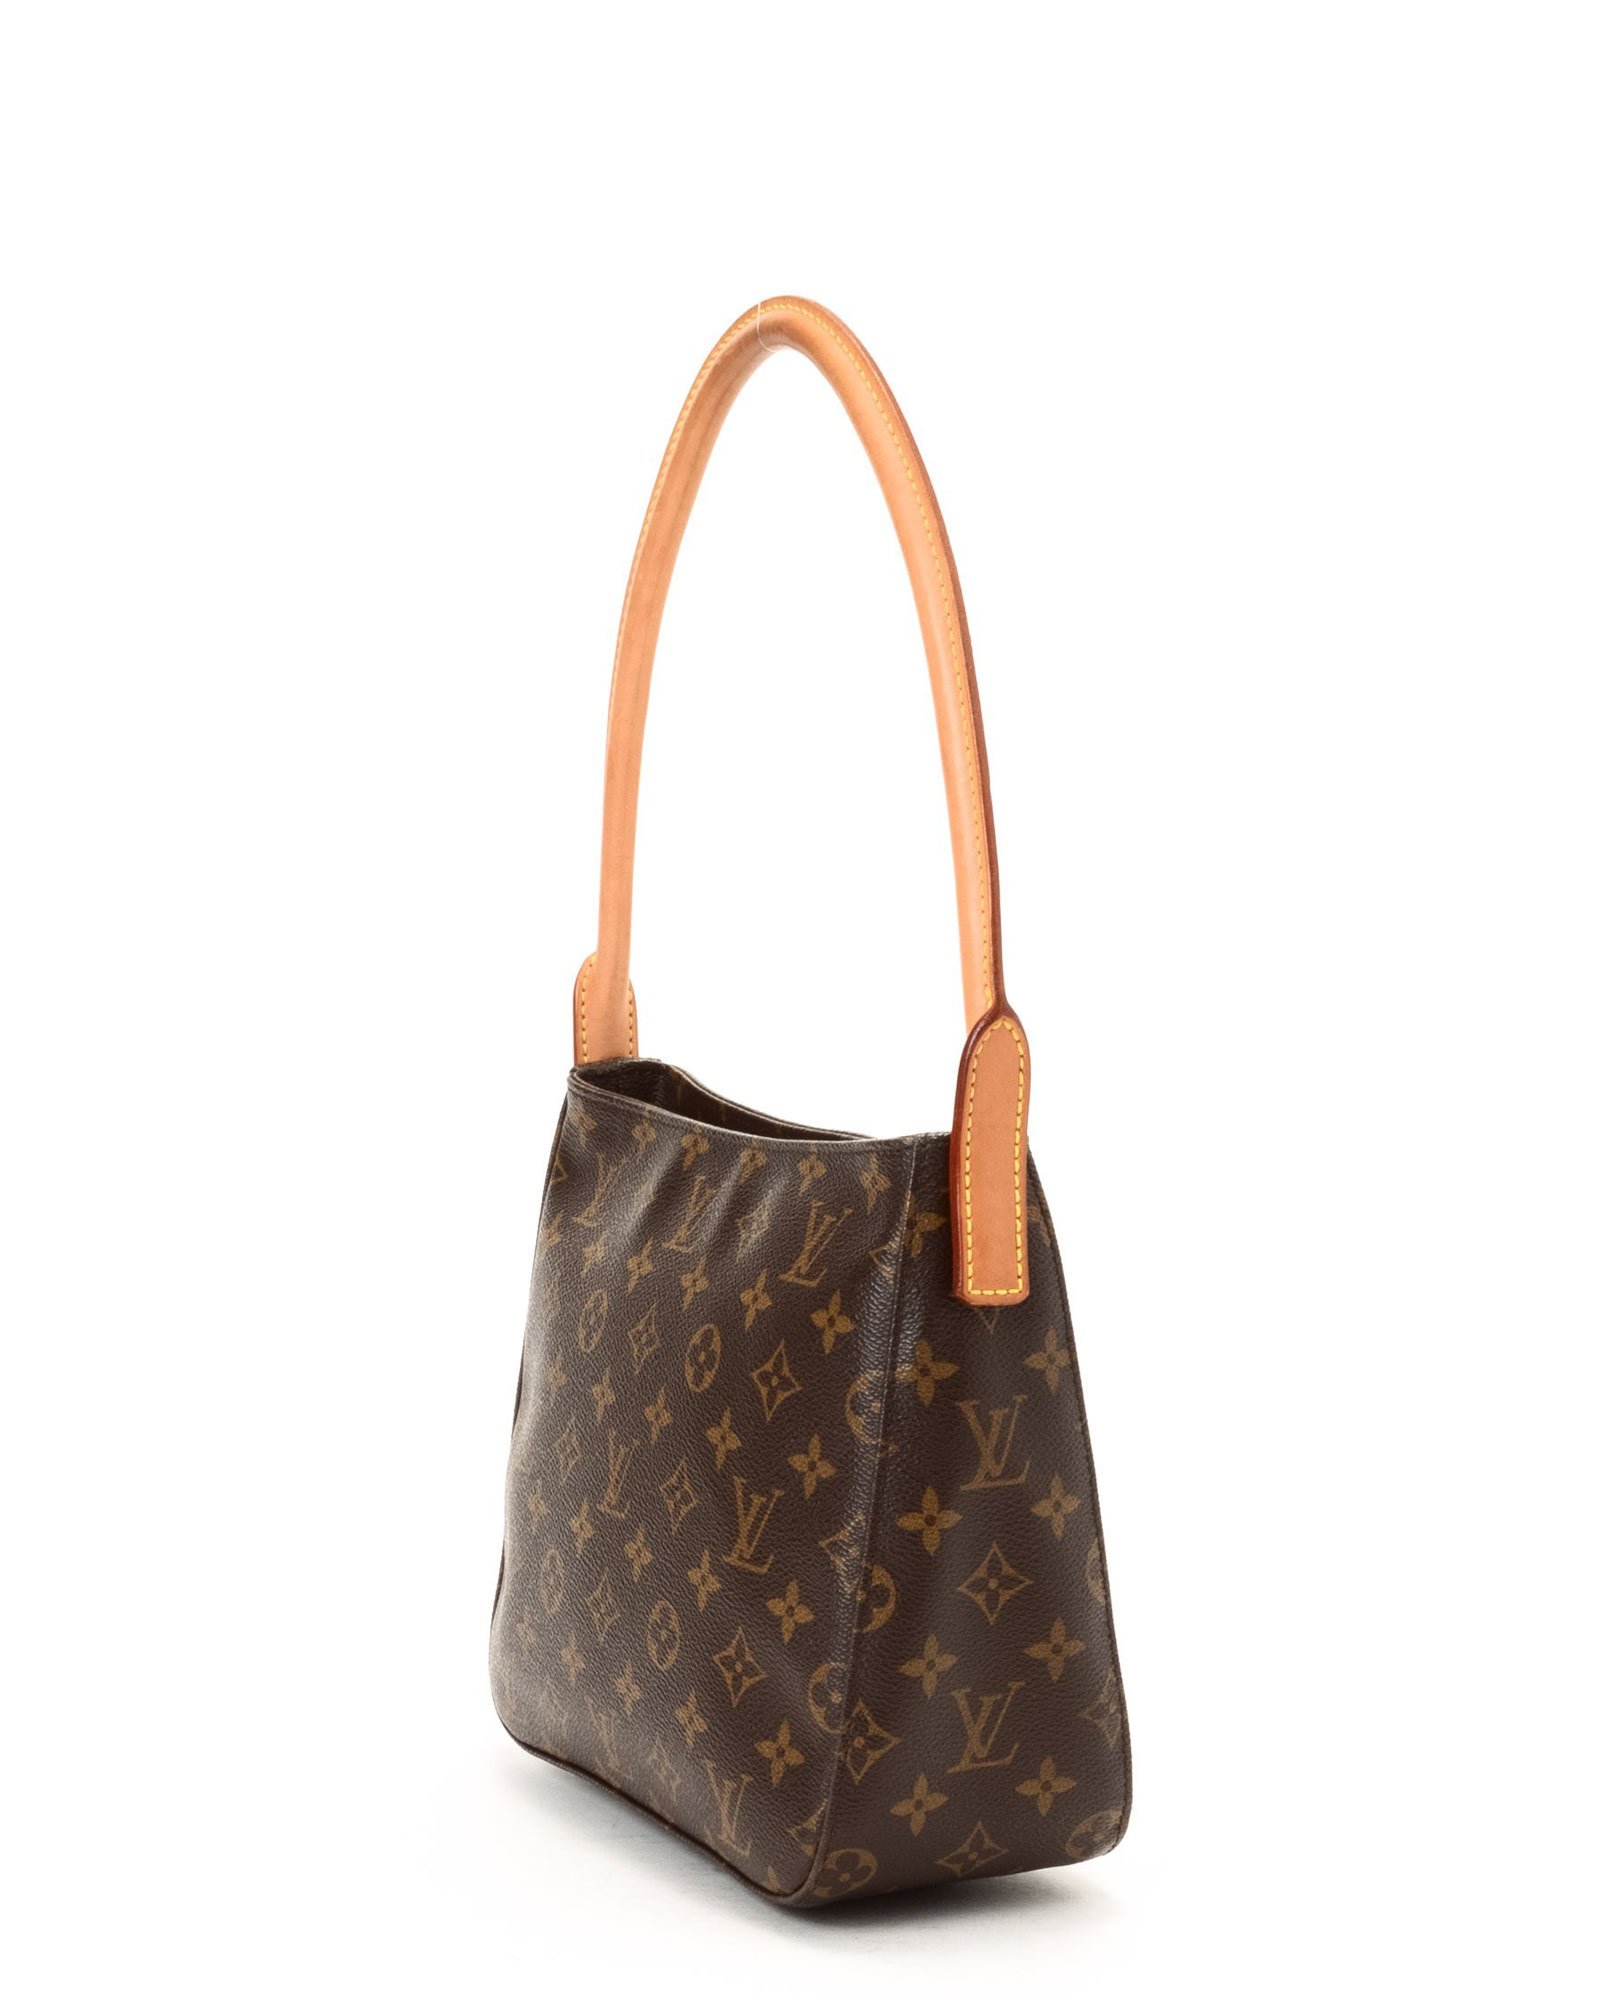 Lyst - Louis Vuitton Monogram Shoulder Bag - Vintage in Brown